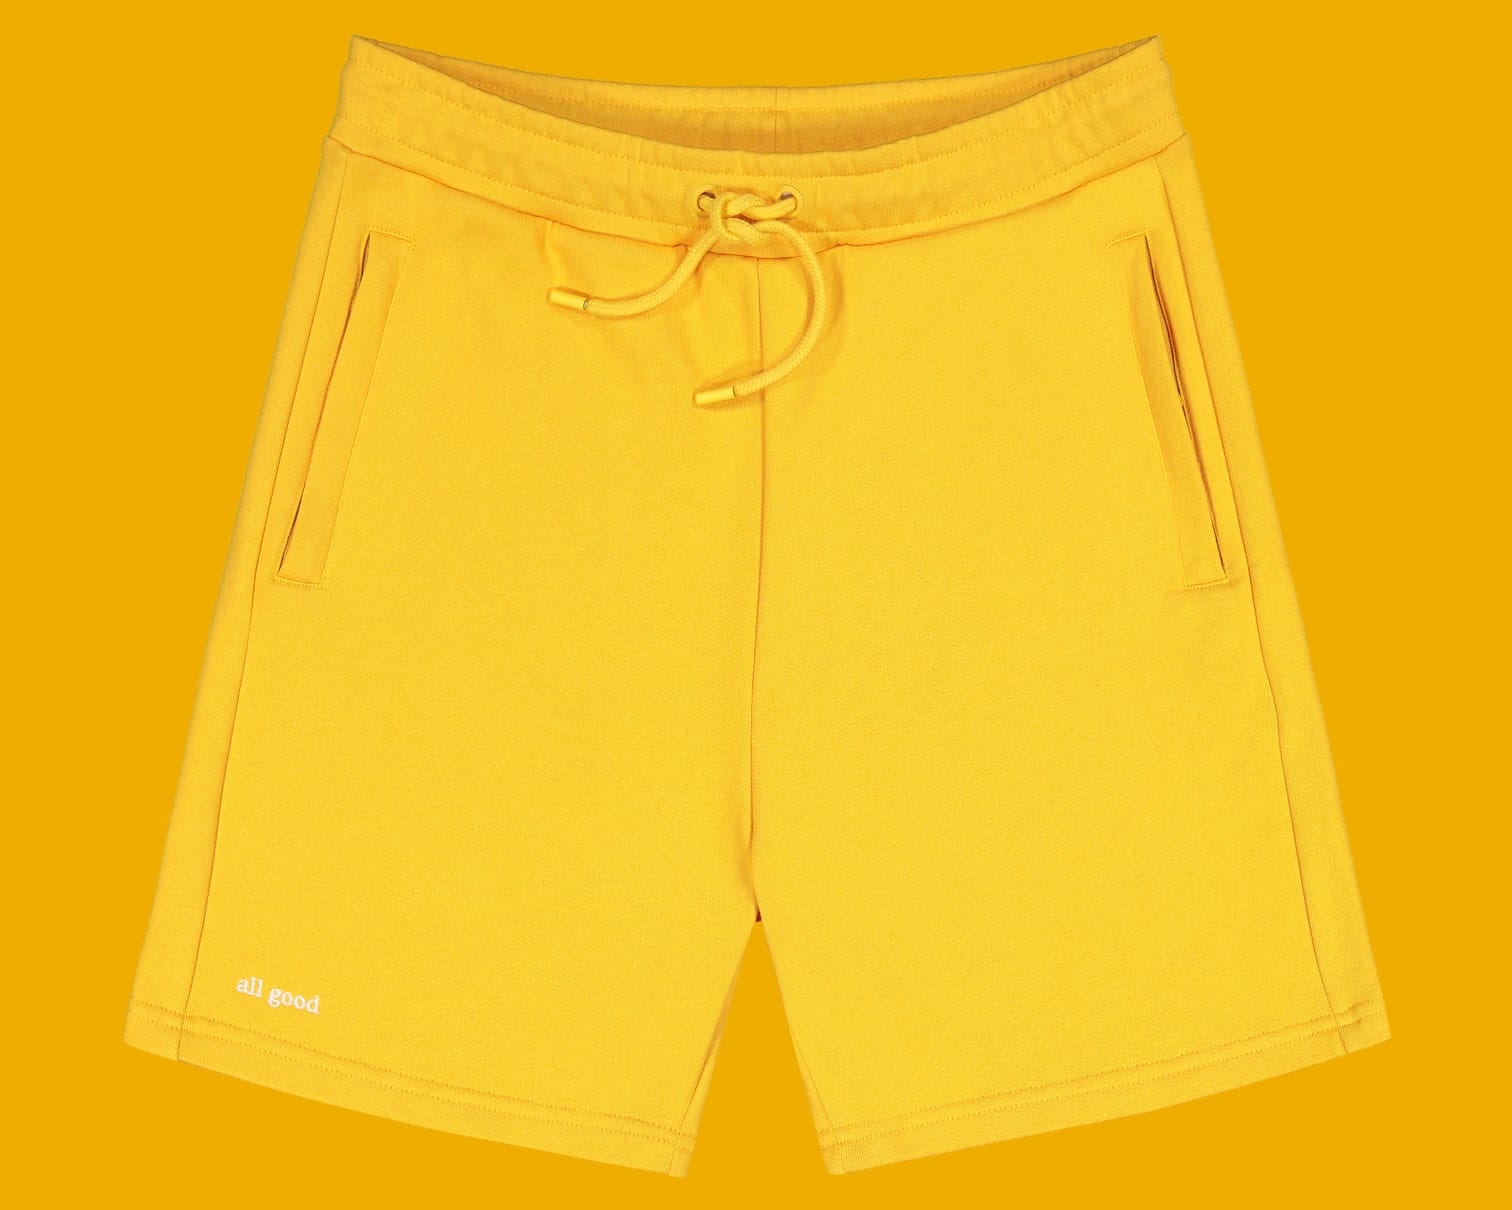 all good shorts, yellow